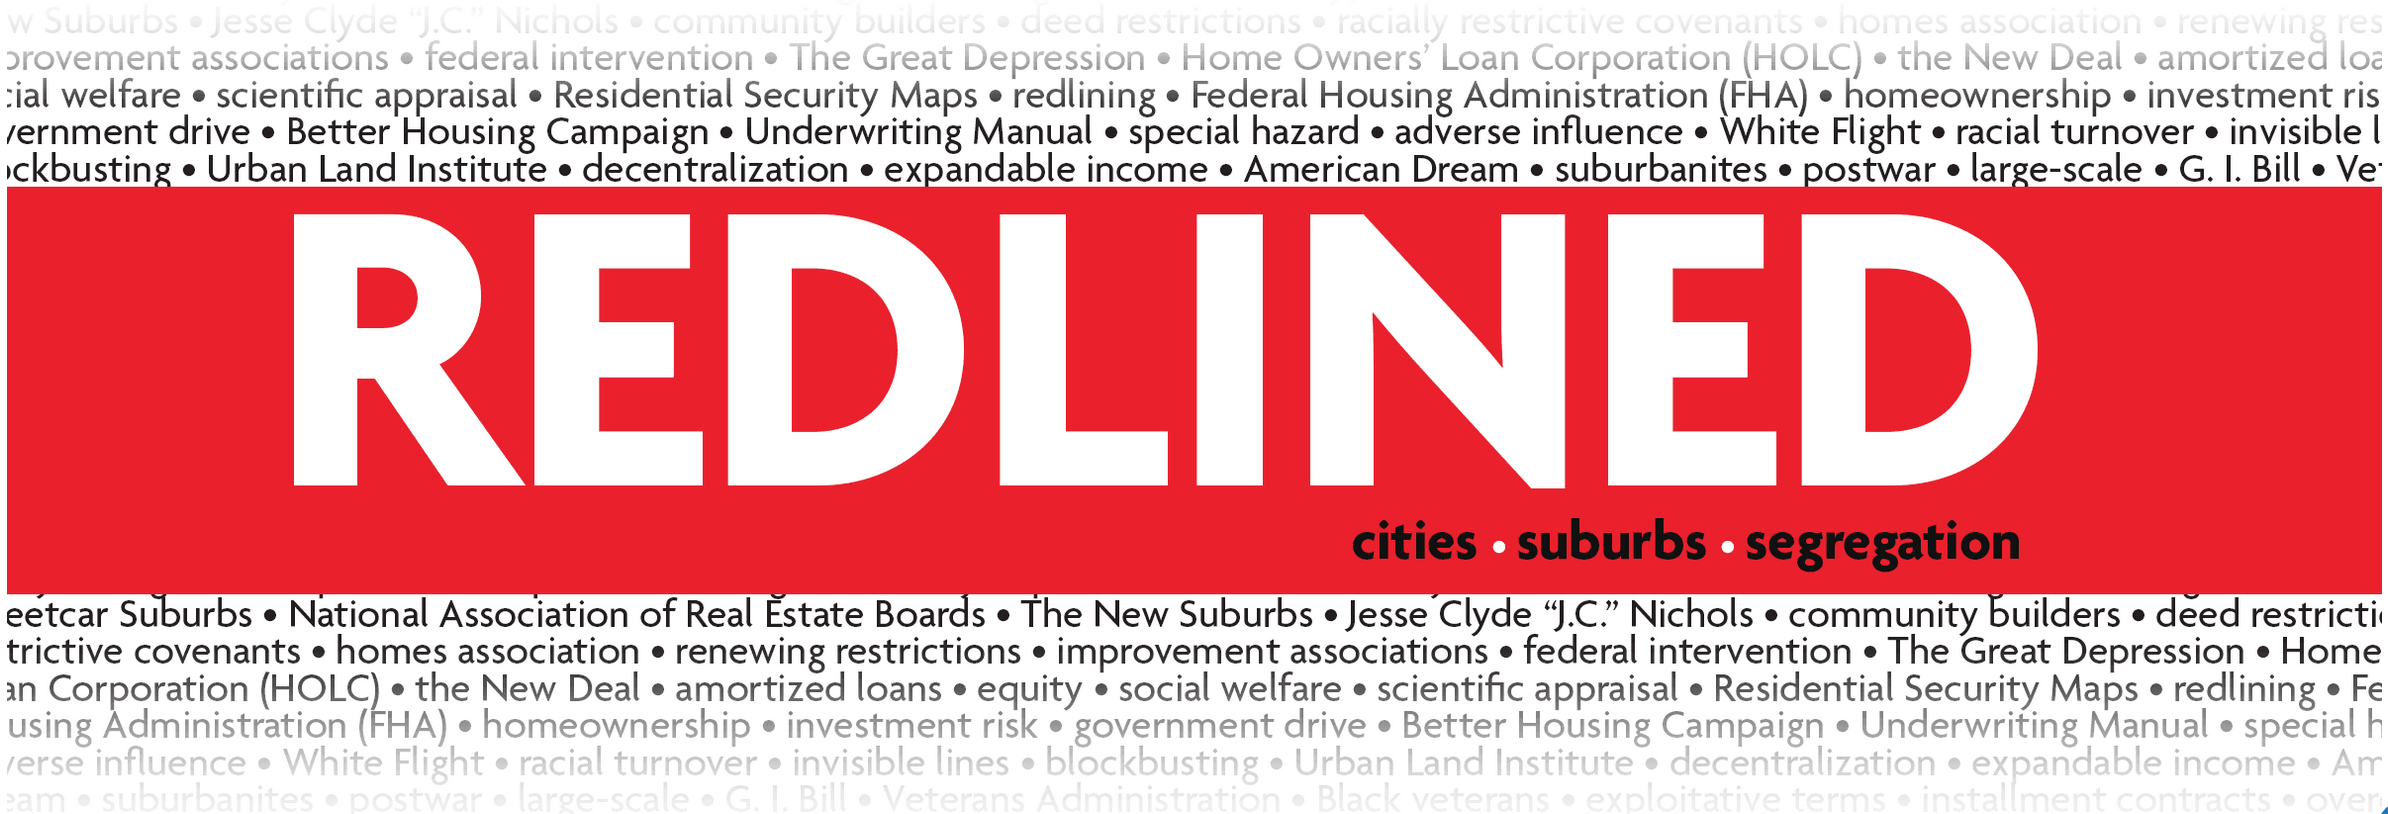 Redlined - Cities, Suburbs, Segregation 